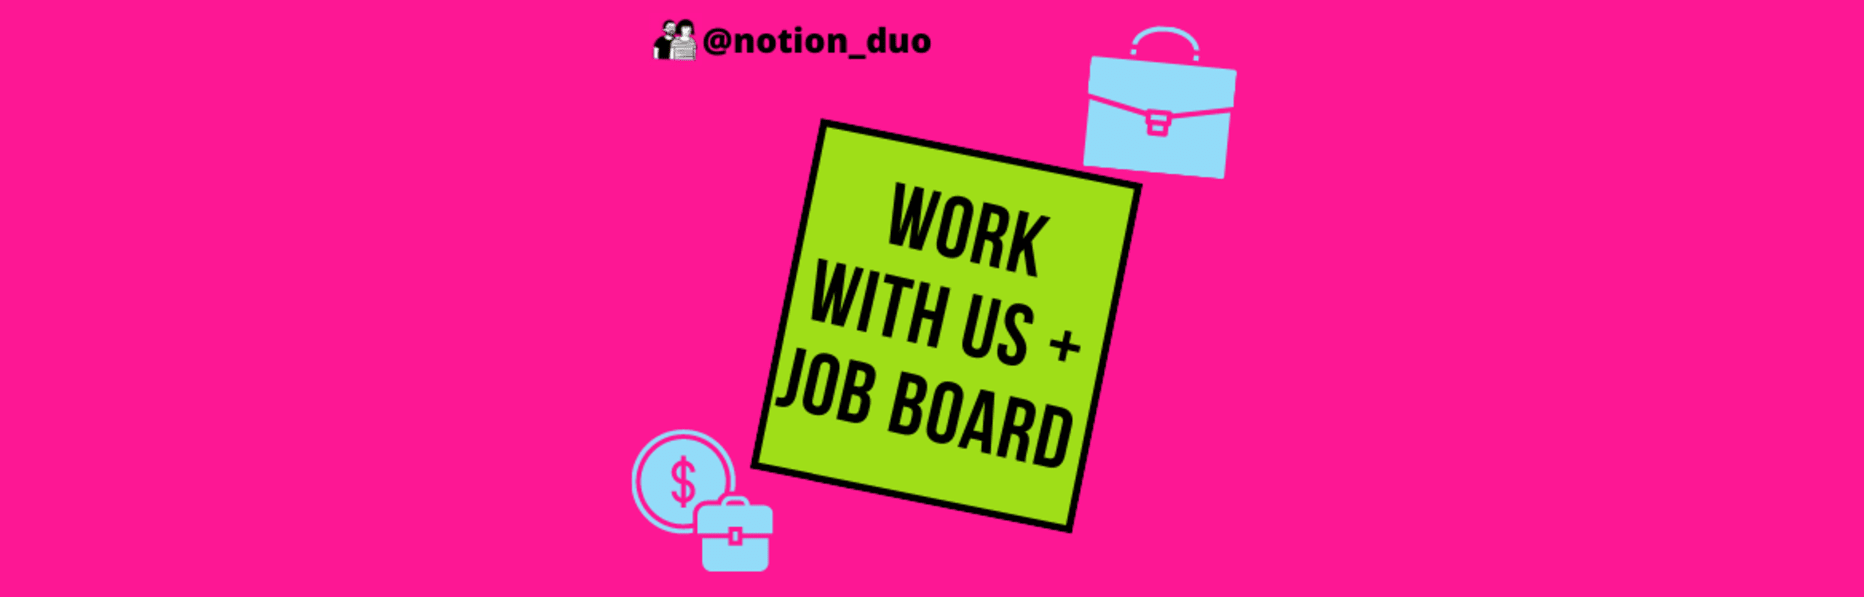 Notion Duo's Job Board